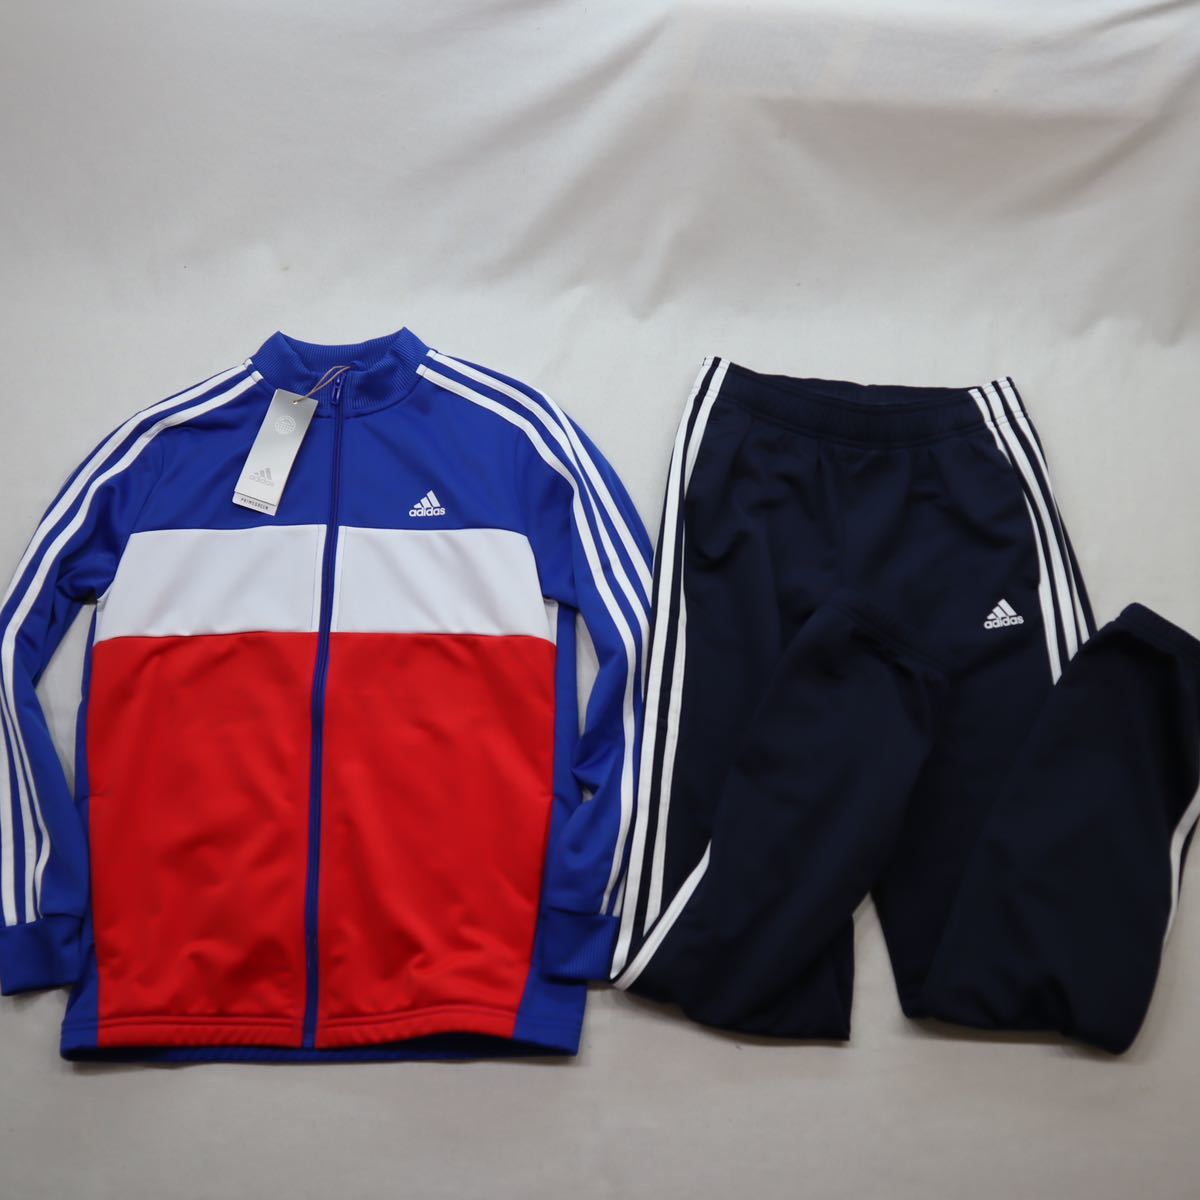 adidas( Adidas ) Esse n car ruzto Lux -tsu(29325) sport training jersey jacket pants top and bottom set Junior 160